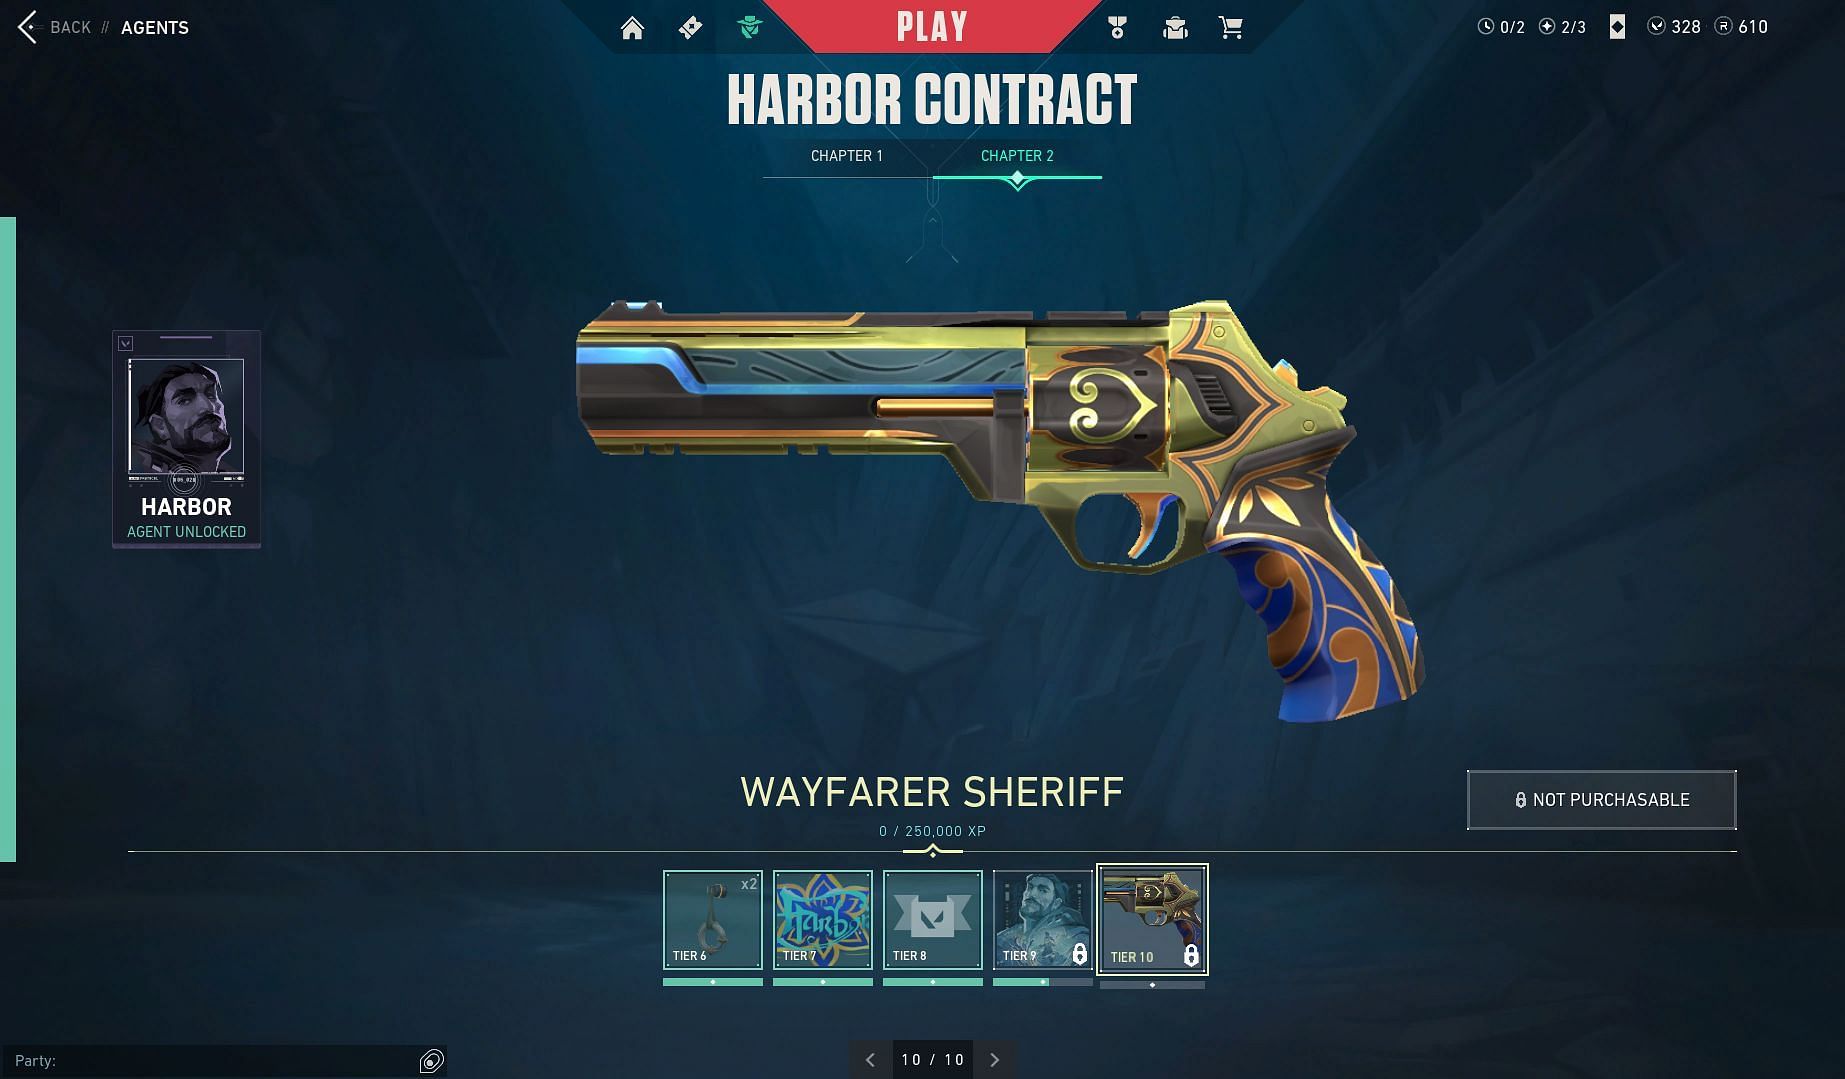 Wayfarer Sheriff (Image via Sportskeeda)